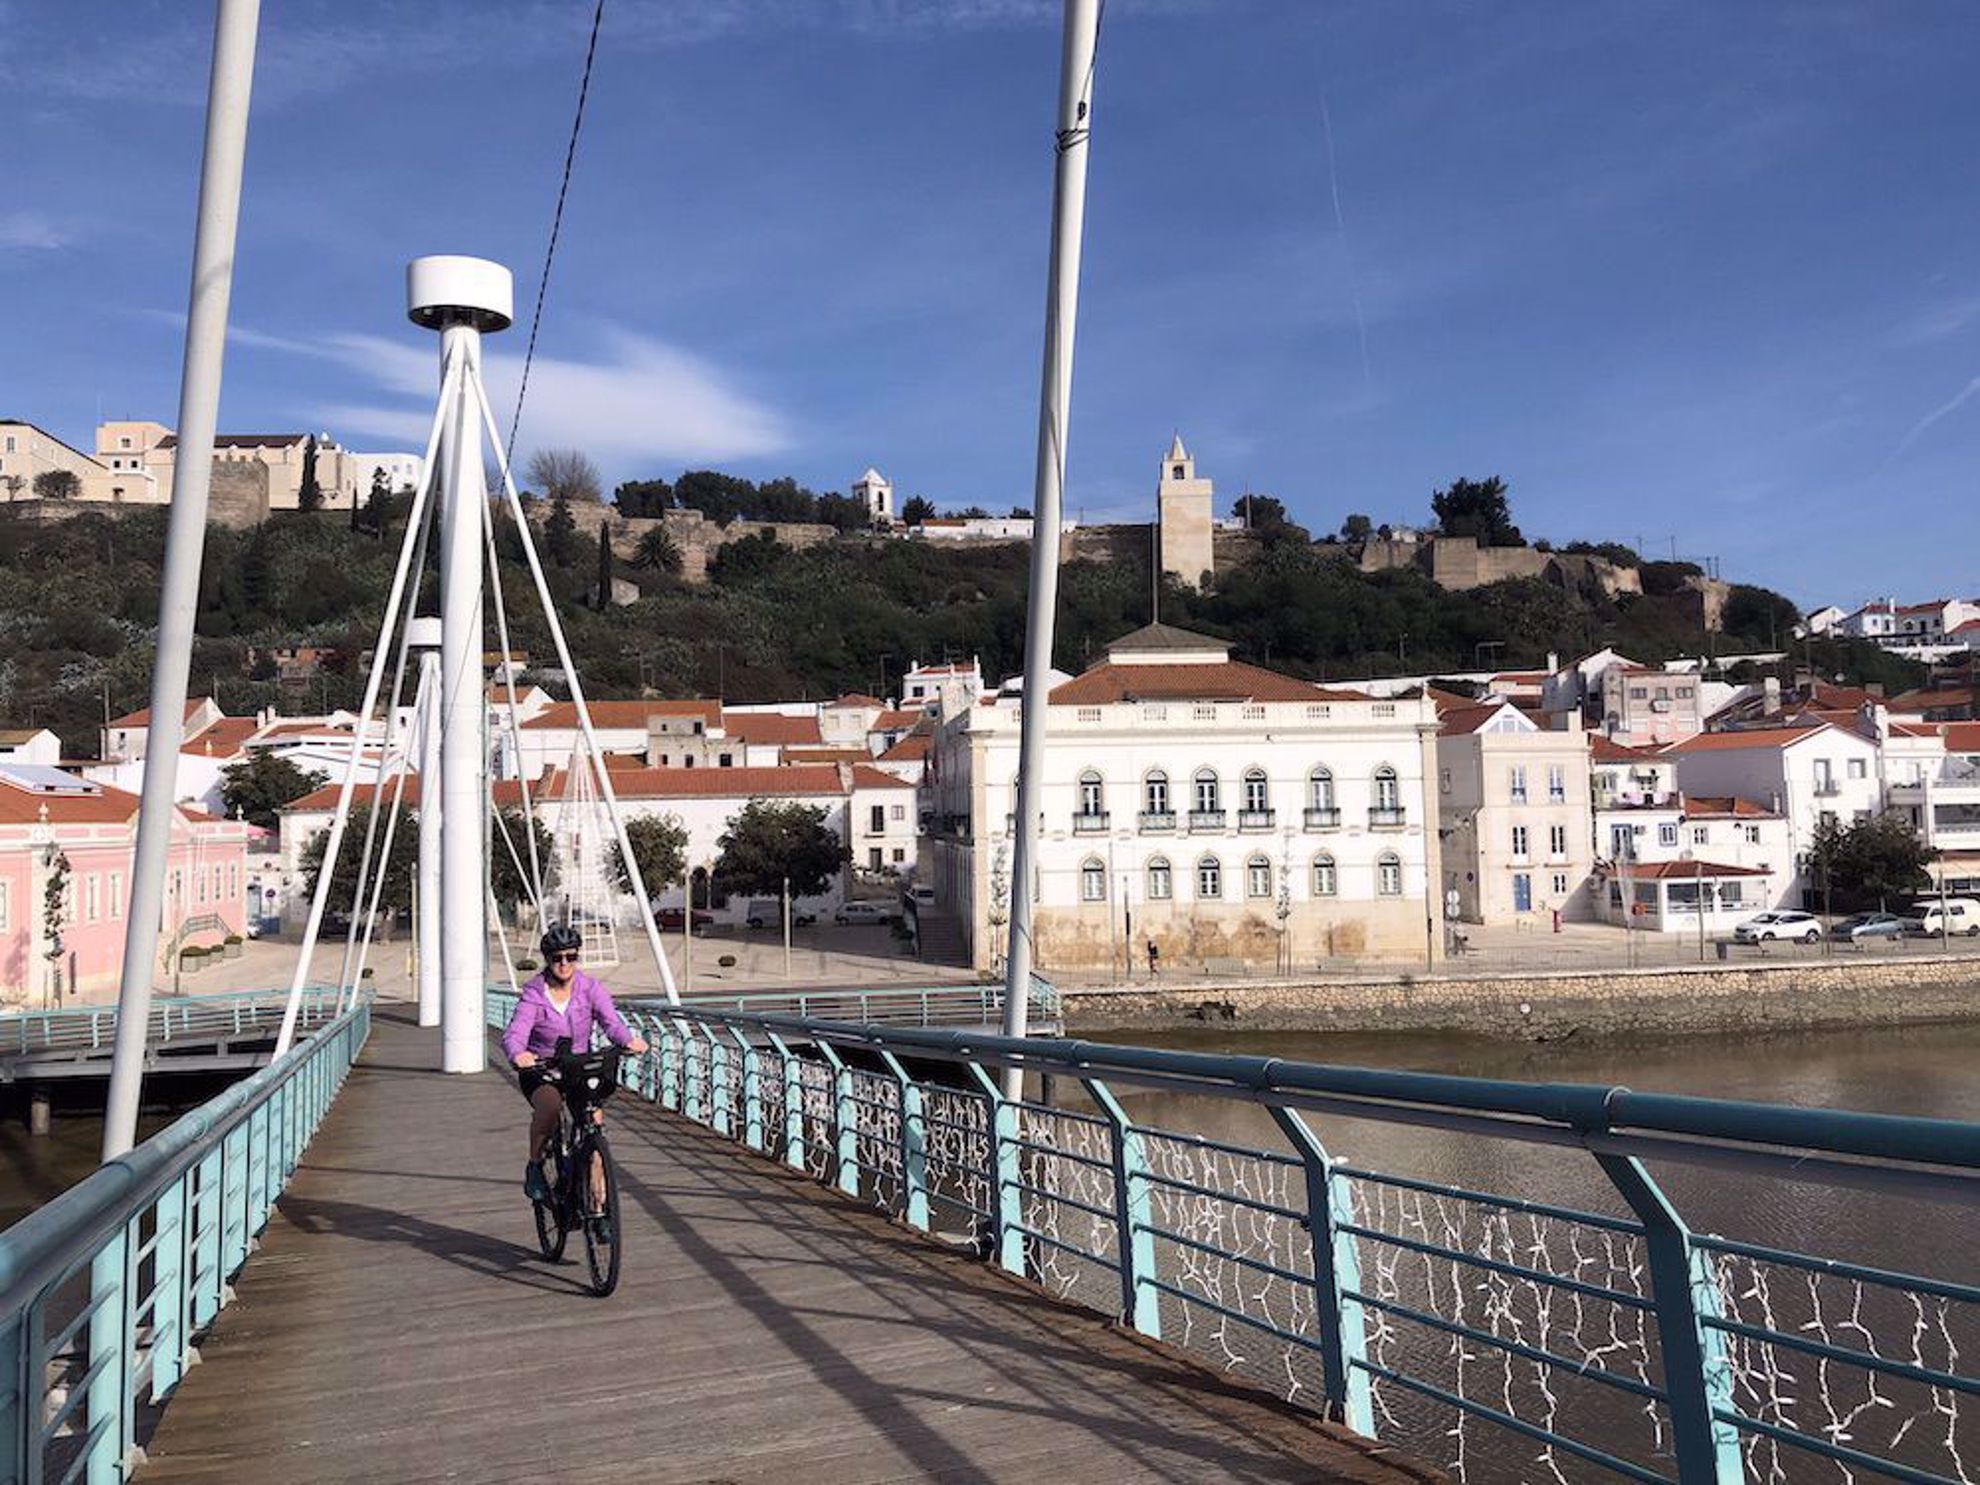 Biking across the bridge